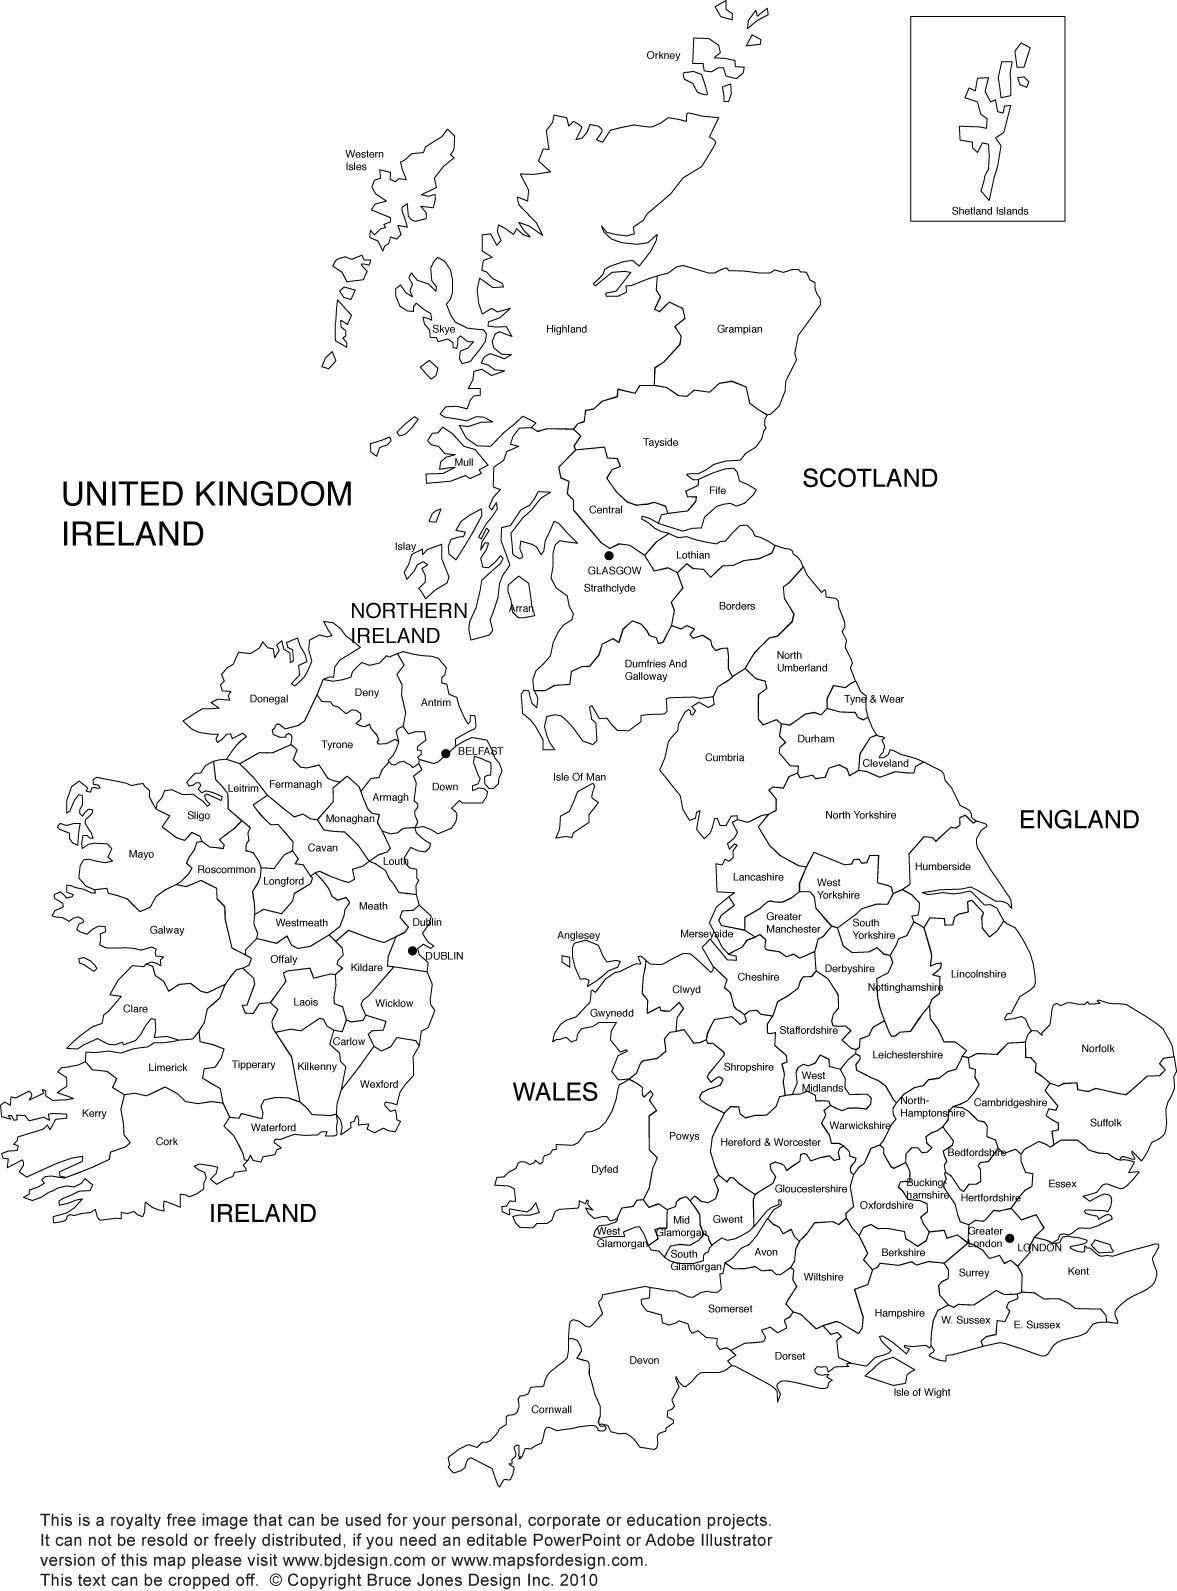 Free Printable Map Of Ireland | Royalty Free Printable, Blank - Free Printable Map Of Uk And Ireland